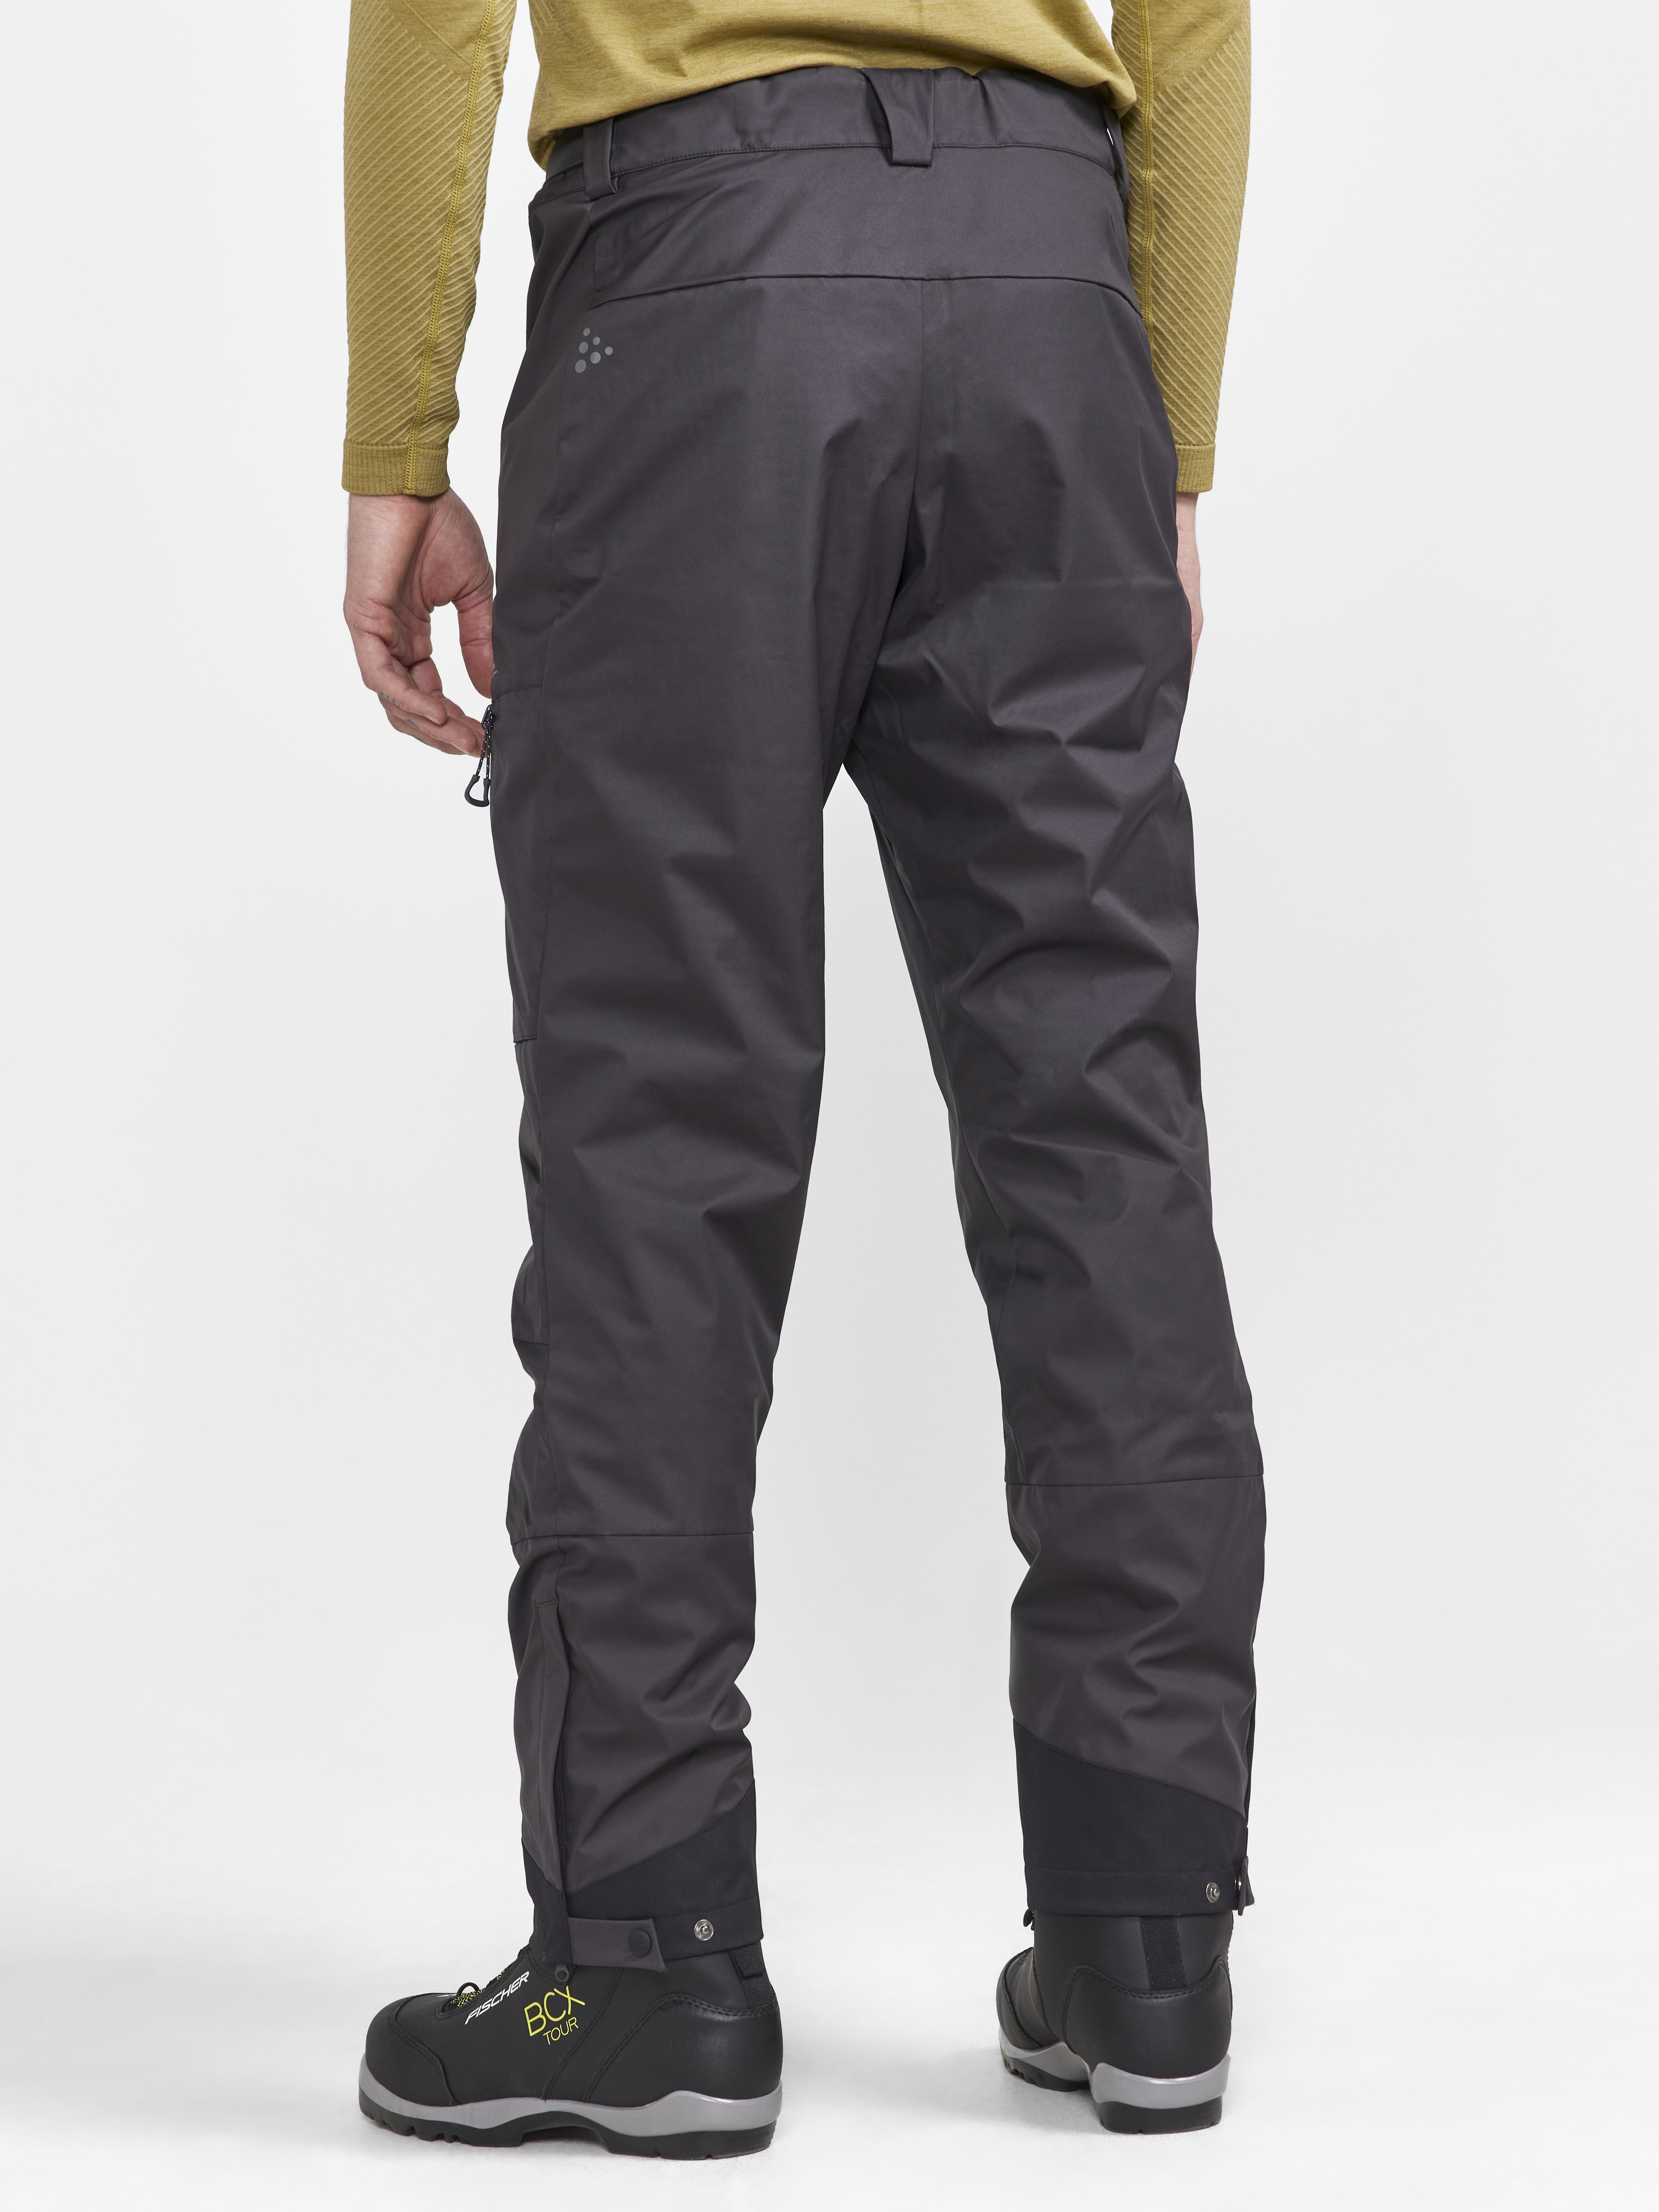 excelleren Groene bonen Maan ADV Backcountry Pants M - Grey | Craft Sportswear